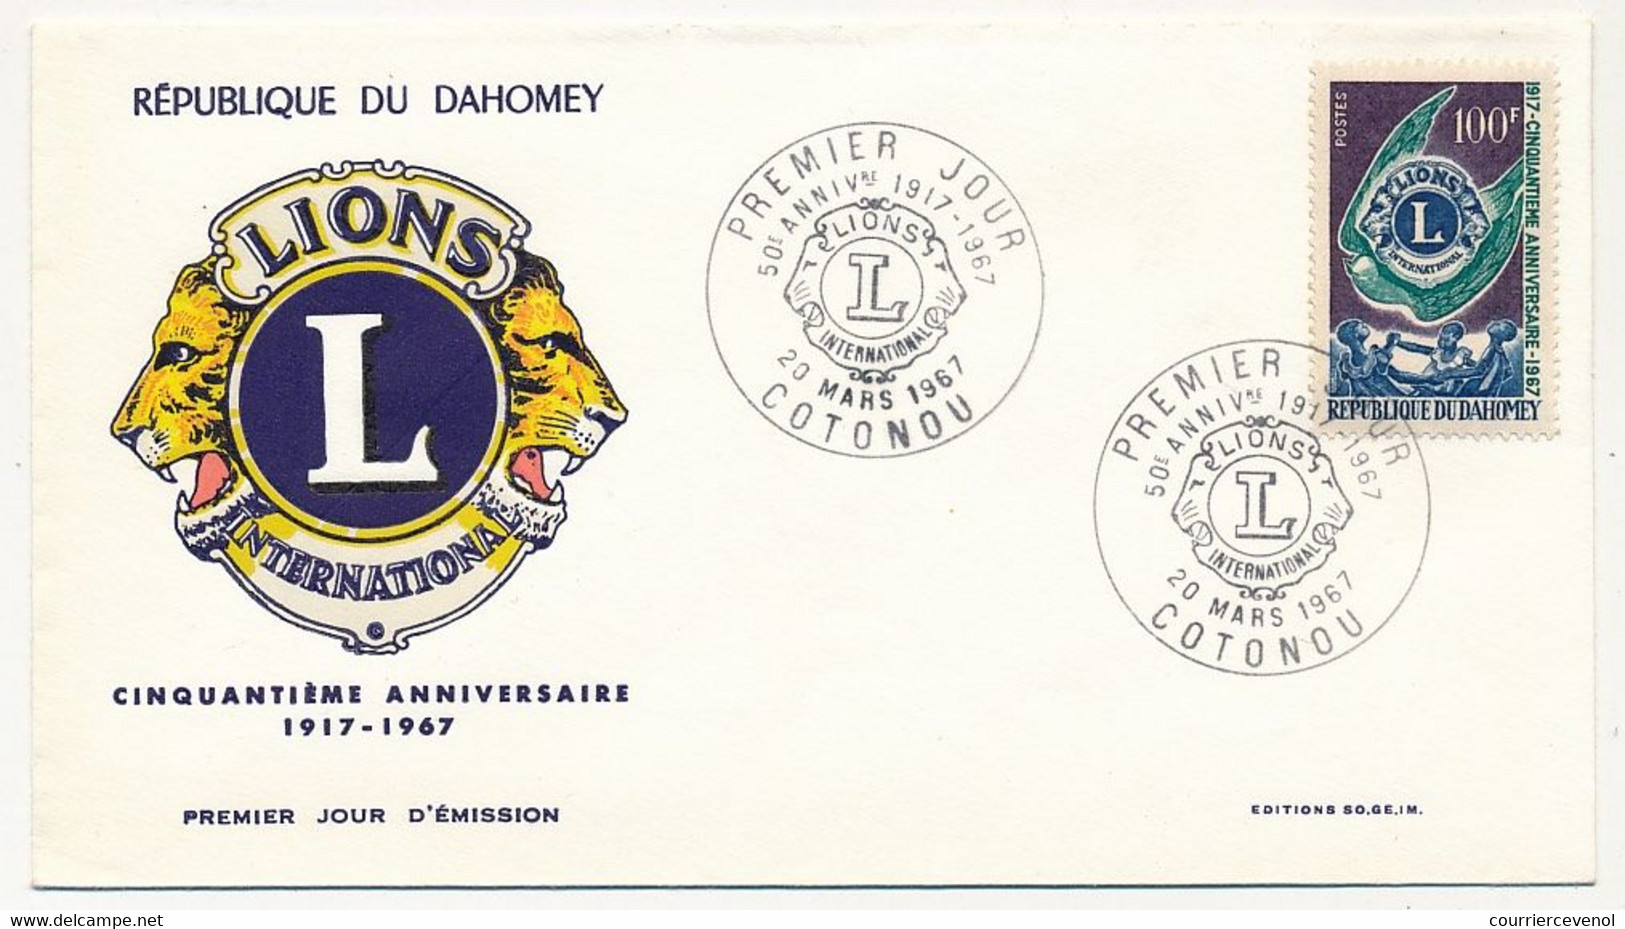 DAHOMEY - 1 Enveloppe FDC - 100F Lions Club International - 20 Mars 1967 - COTONOU - Benin - Dahomey (1960-...)